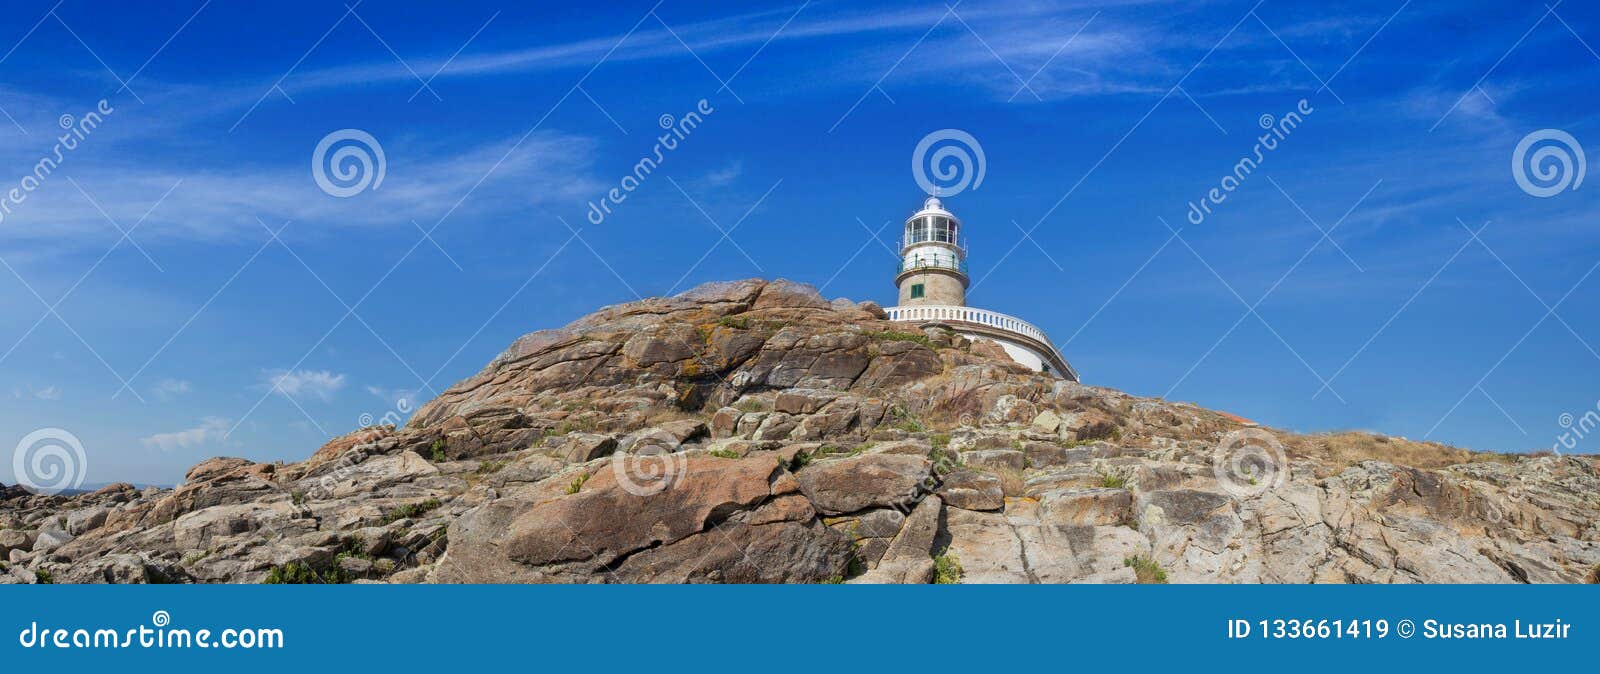 corrubedo lighthouse in galicia, spain.